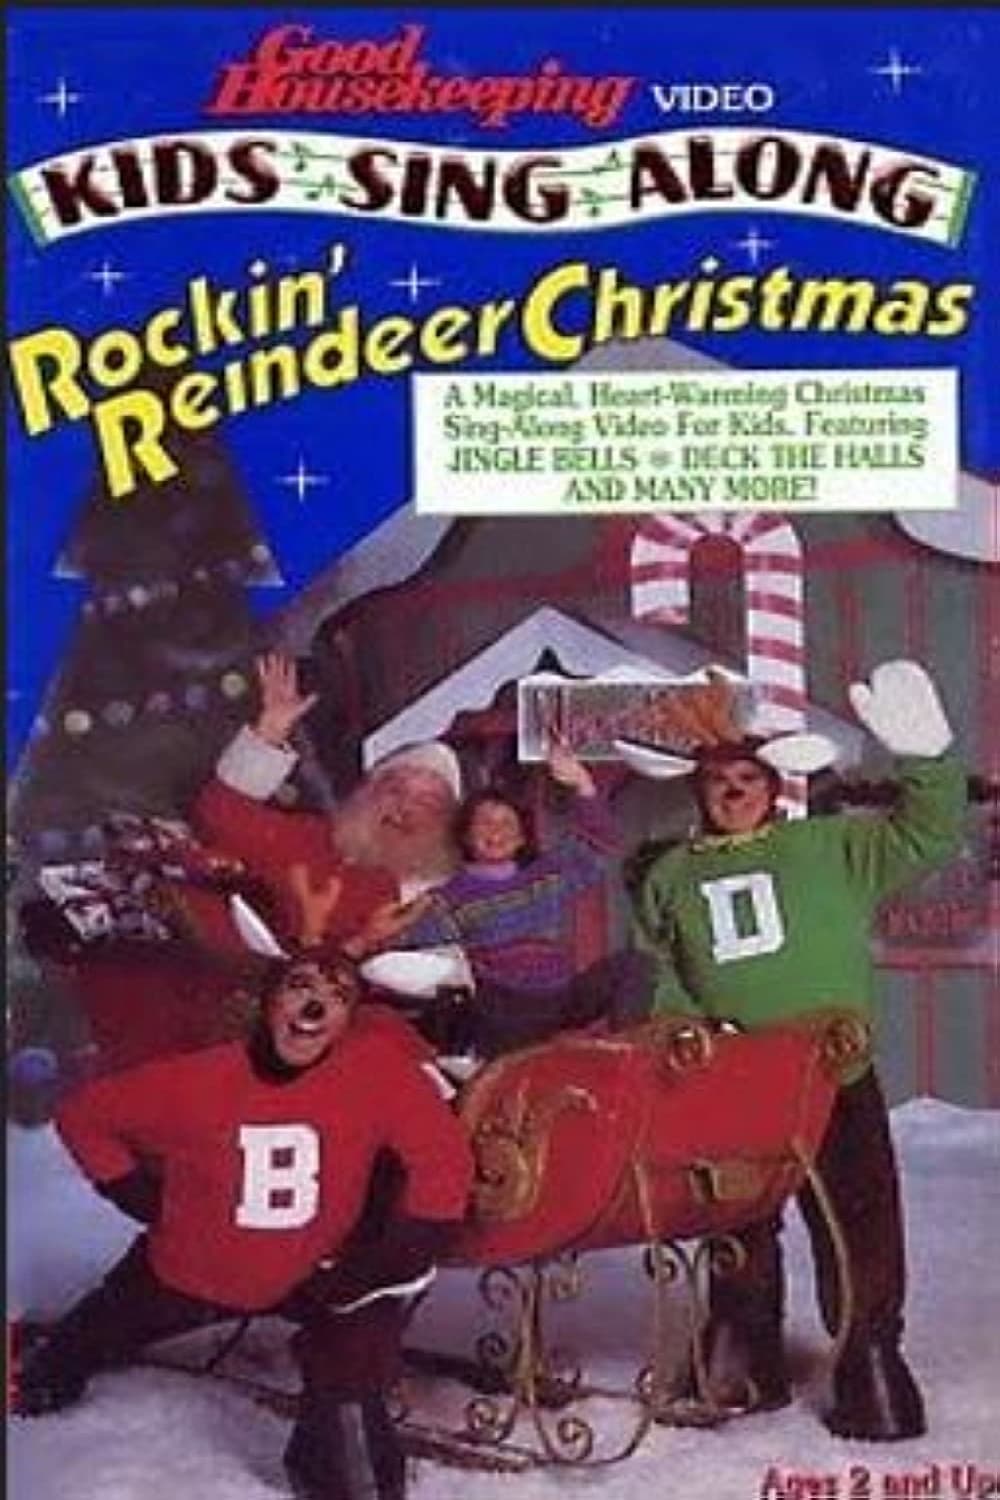 Rockin' Reindeer Christmas